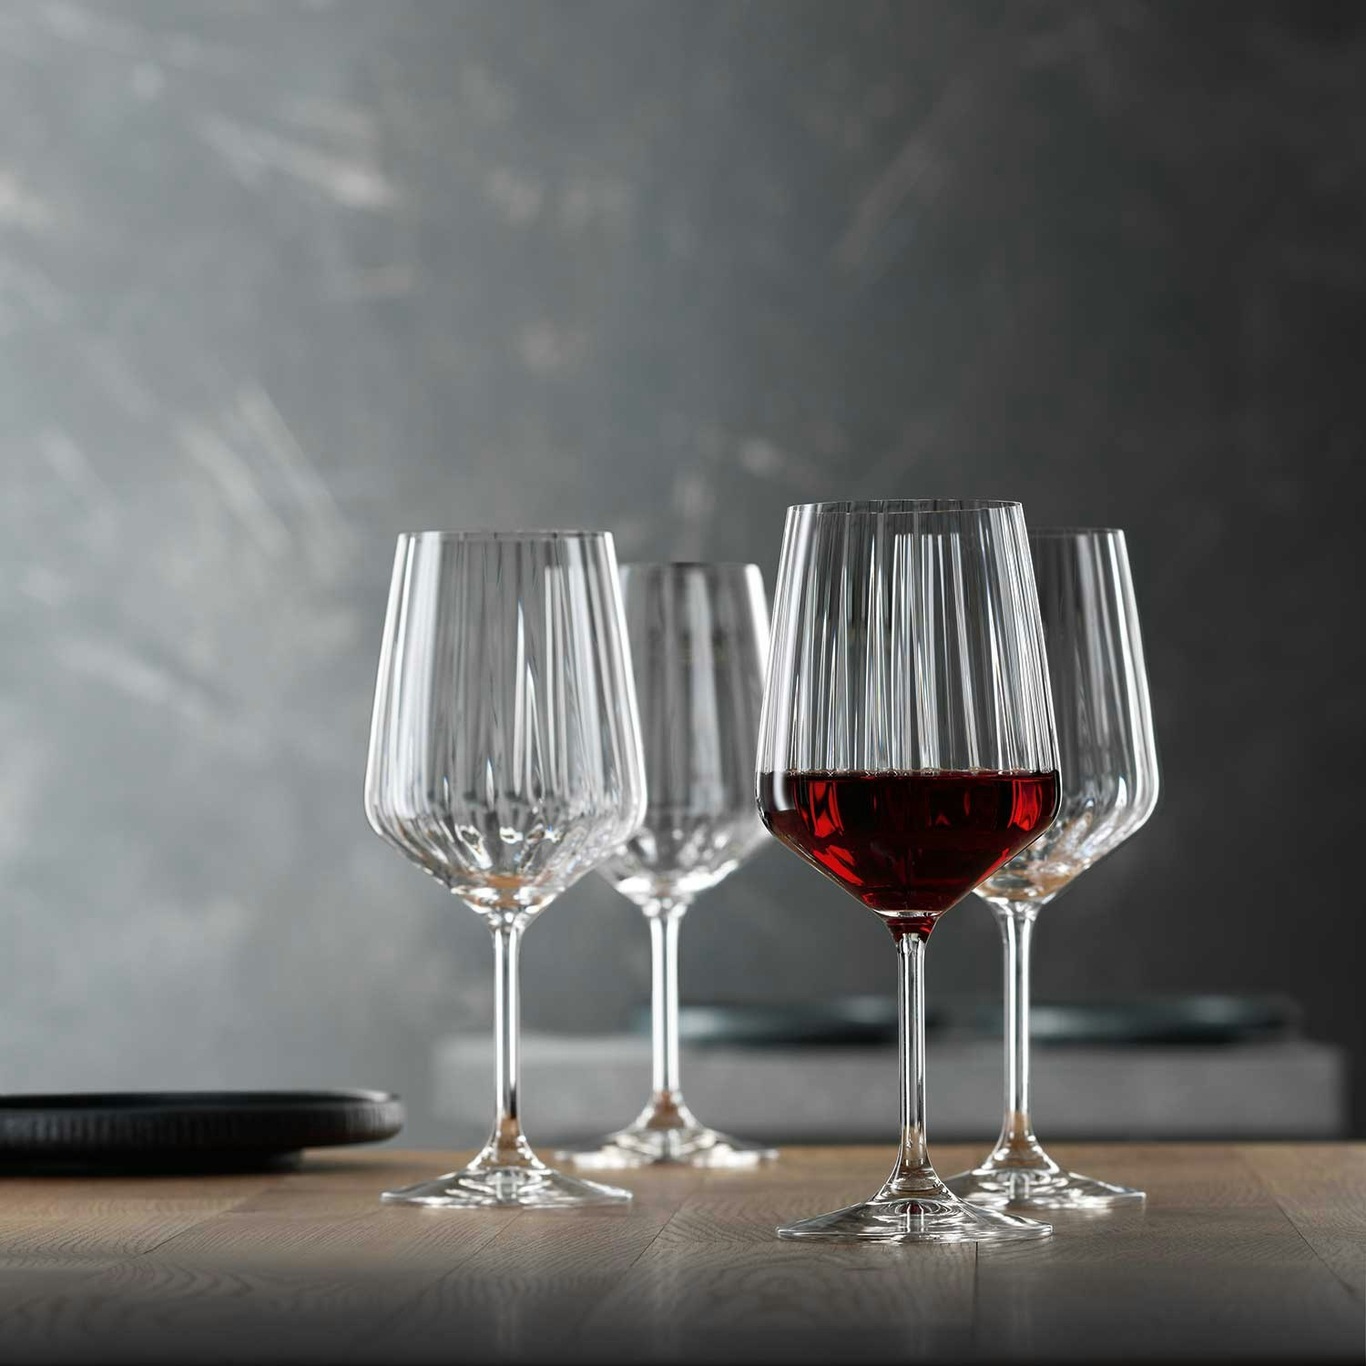 https://royaldesign.com/image/2/spiegelau-lifestyle-red-wine-glass-63-cl-4-pcs-1?w=800&quality=80